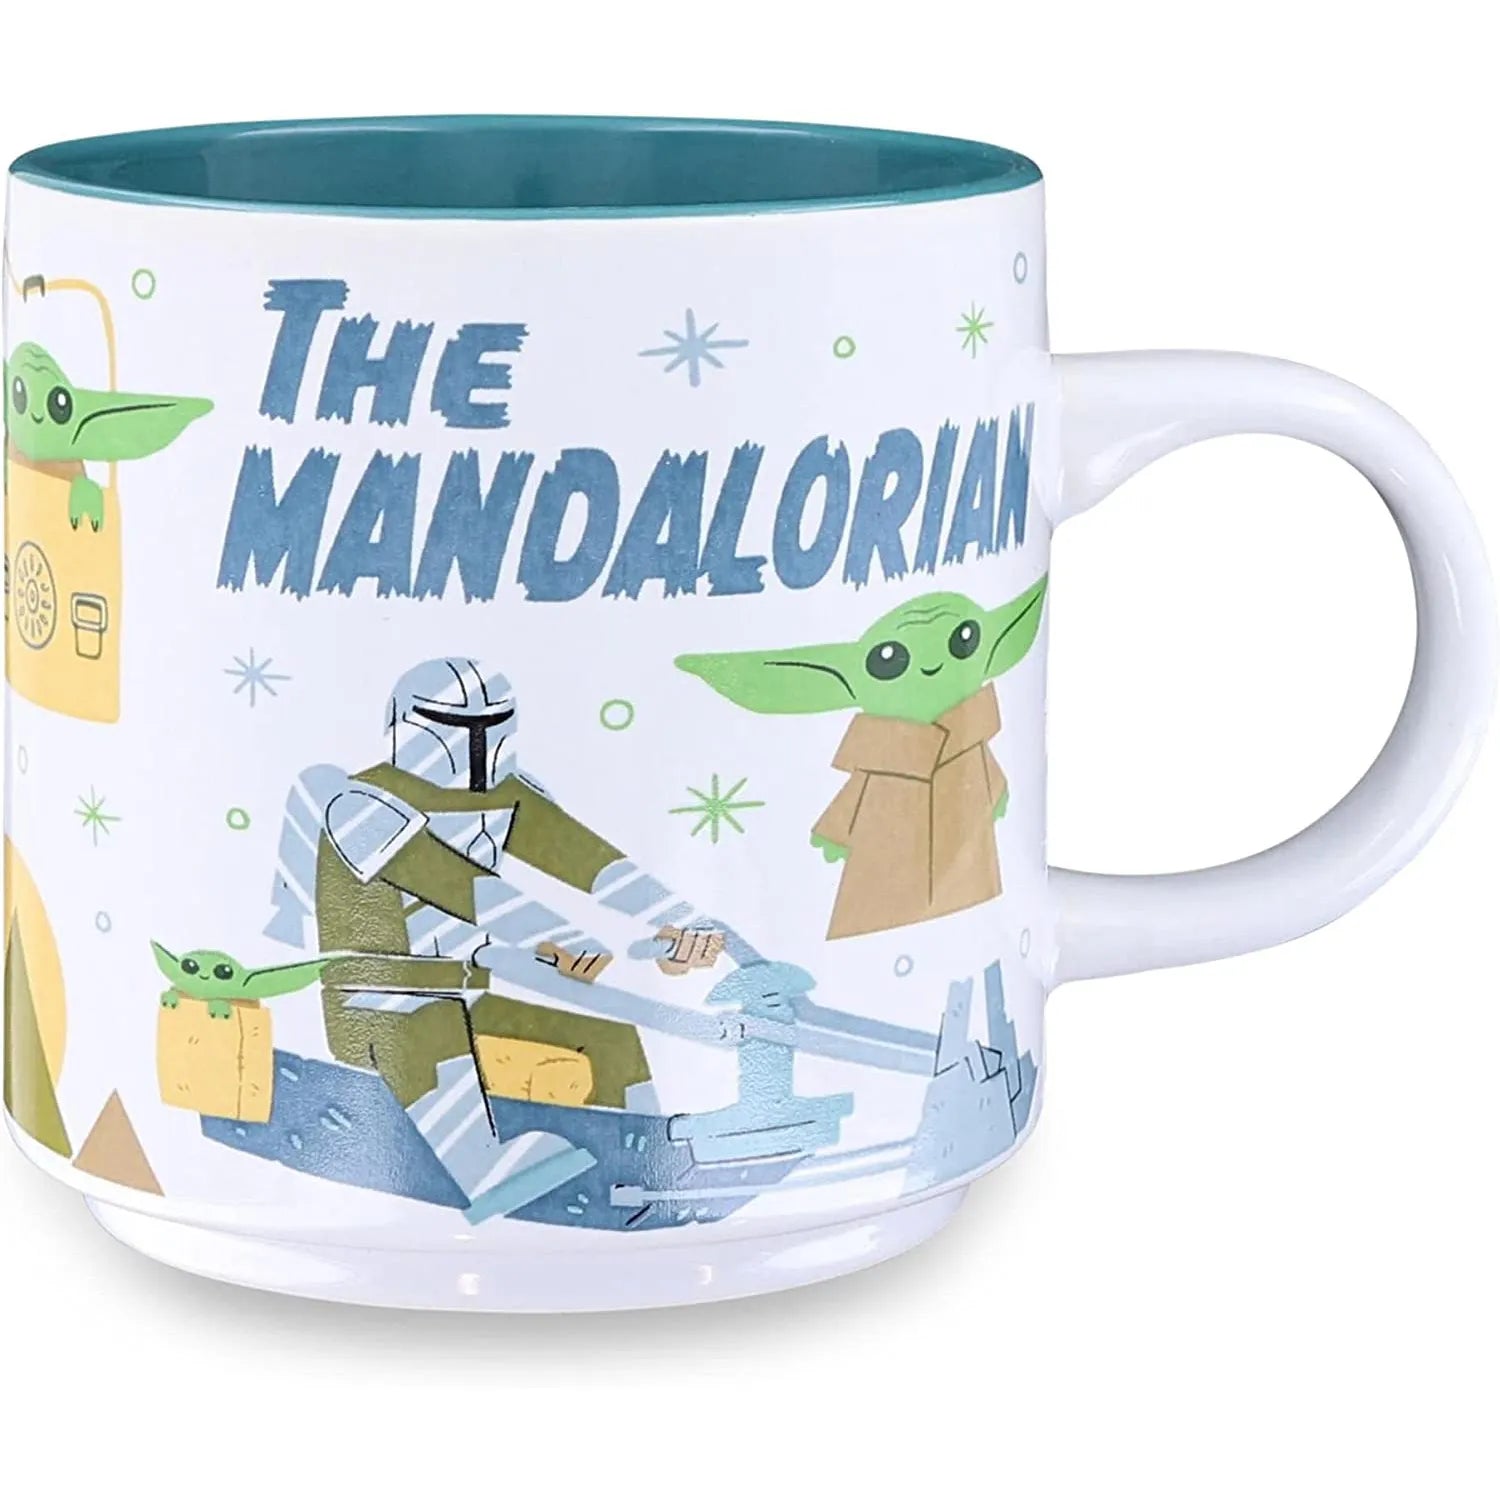 Star Wars The Mandalorian 14oz Stackable Ceramic Mug: Cartoon Grogu Scene